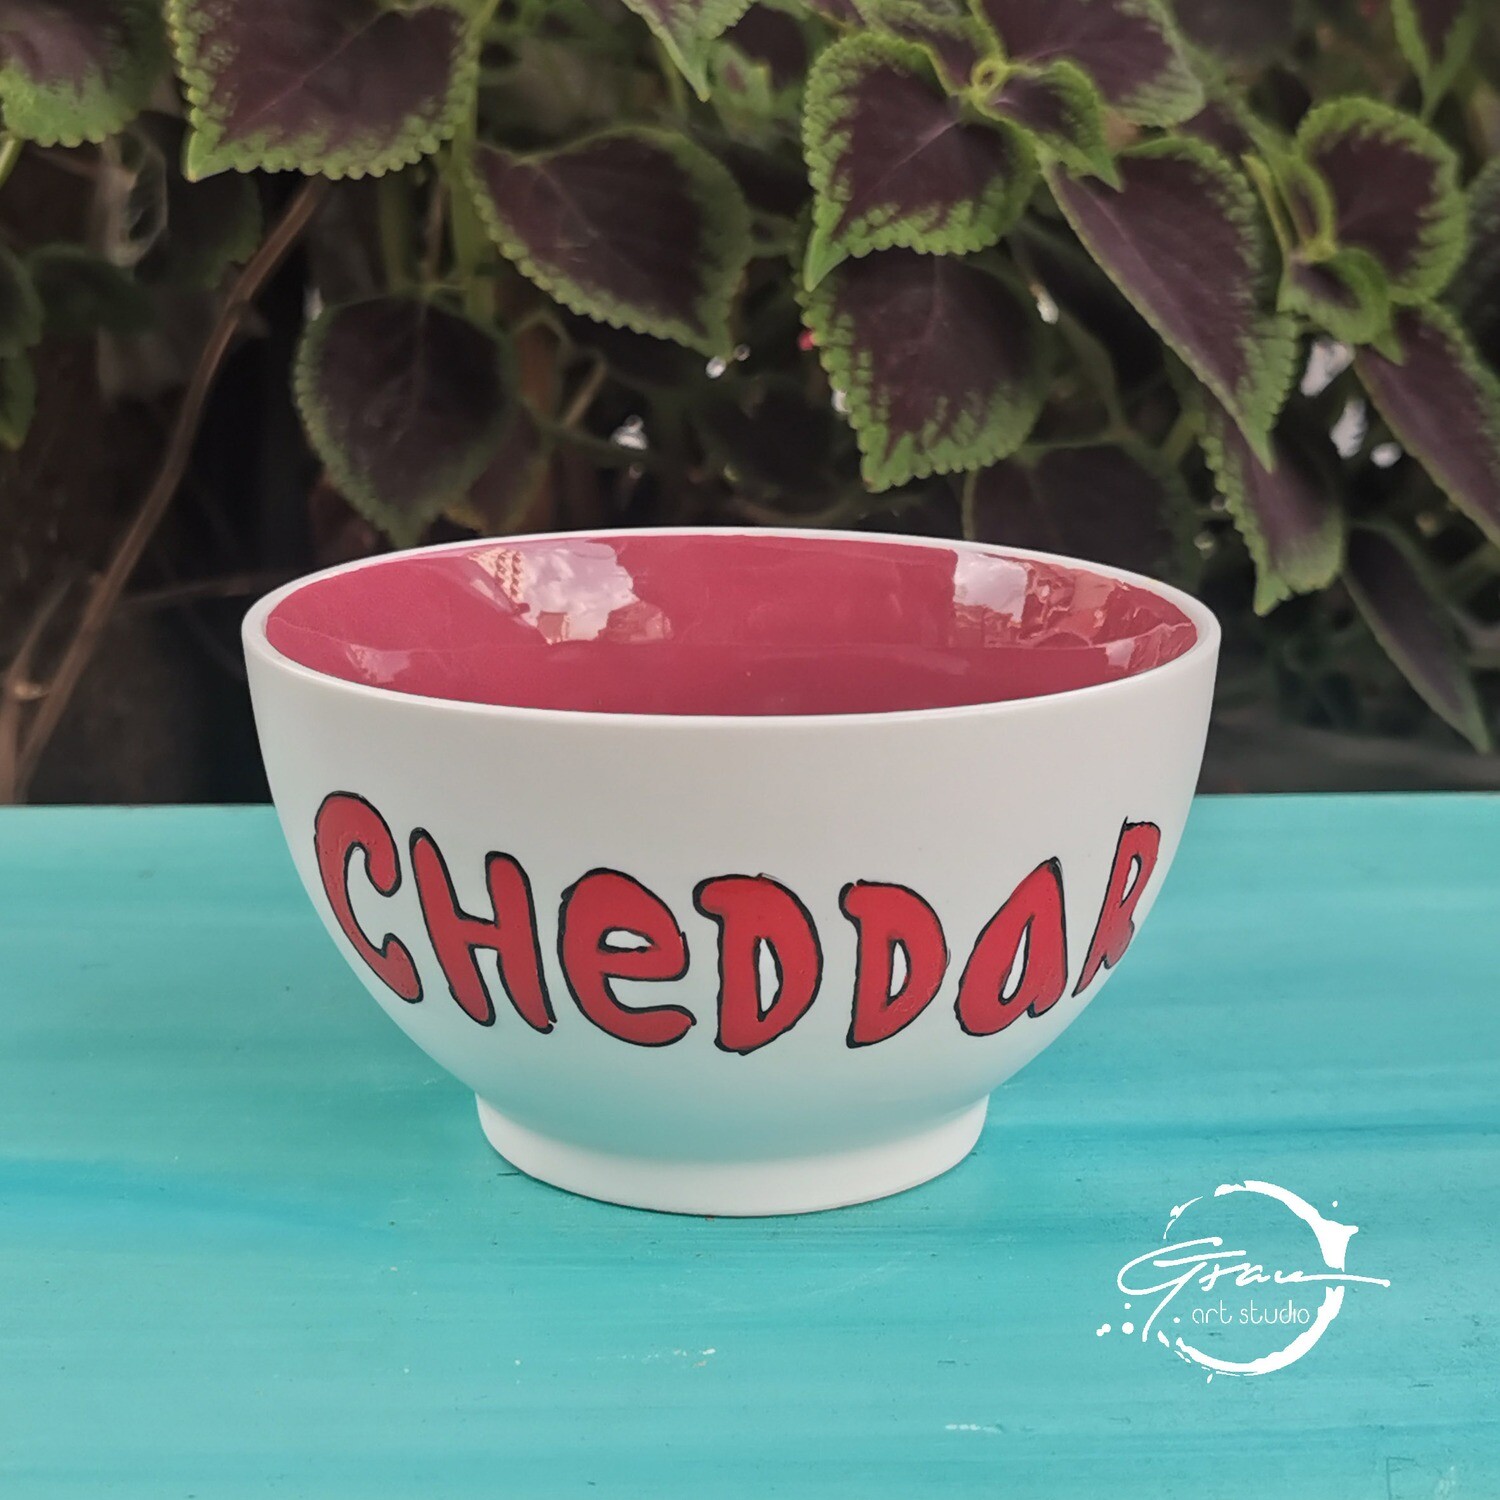 Cheddar Dip Bowl